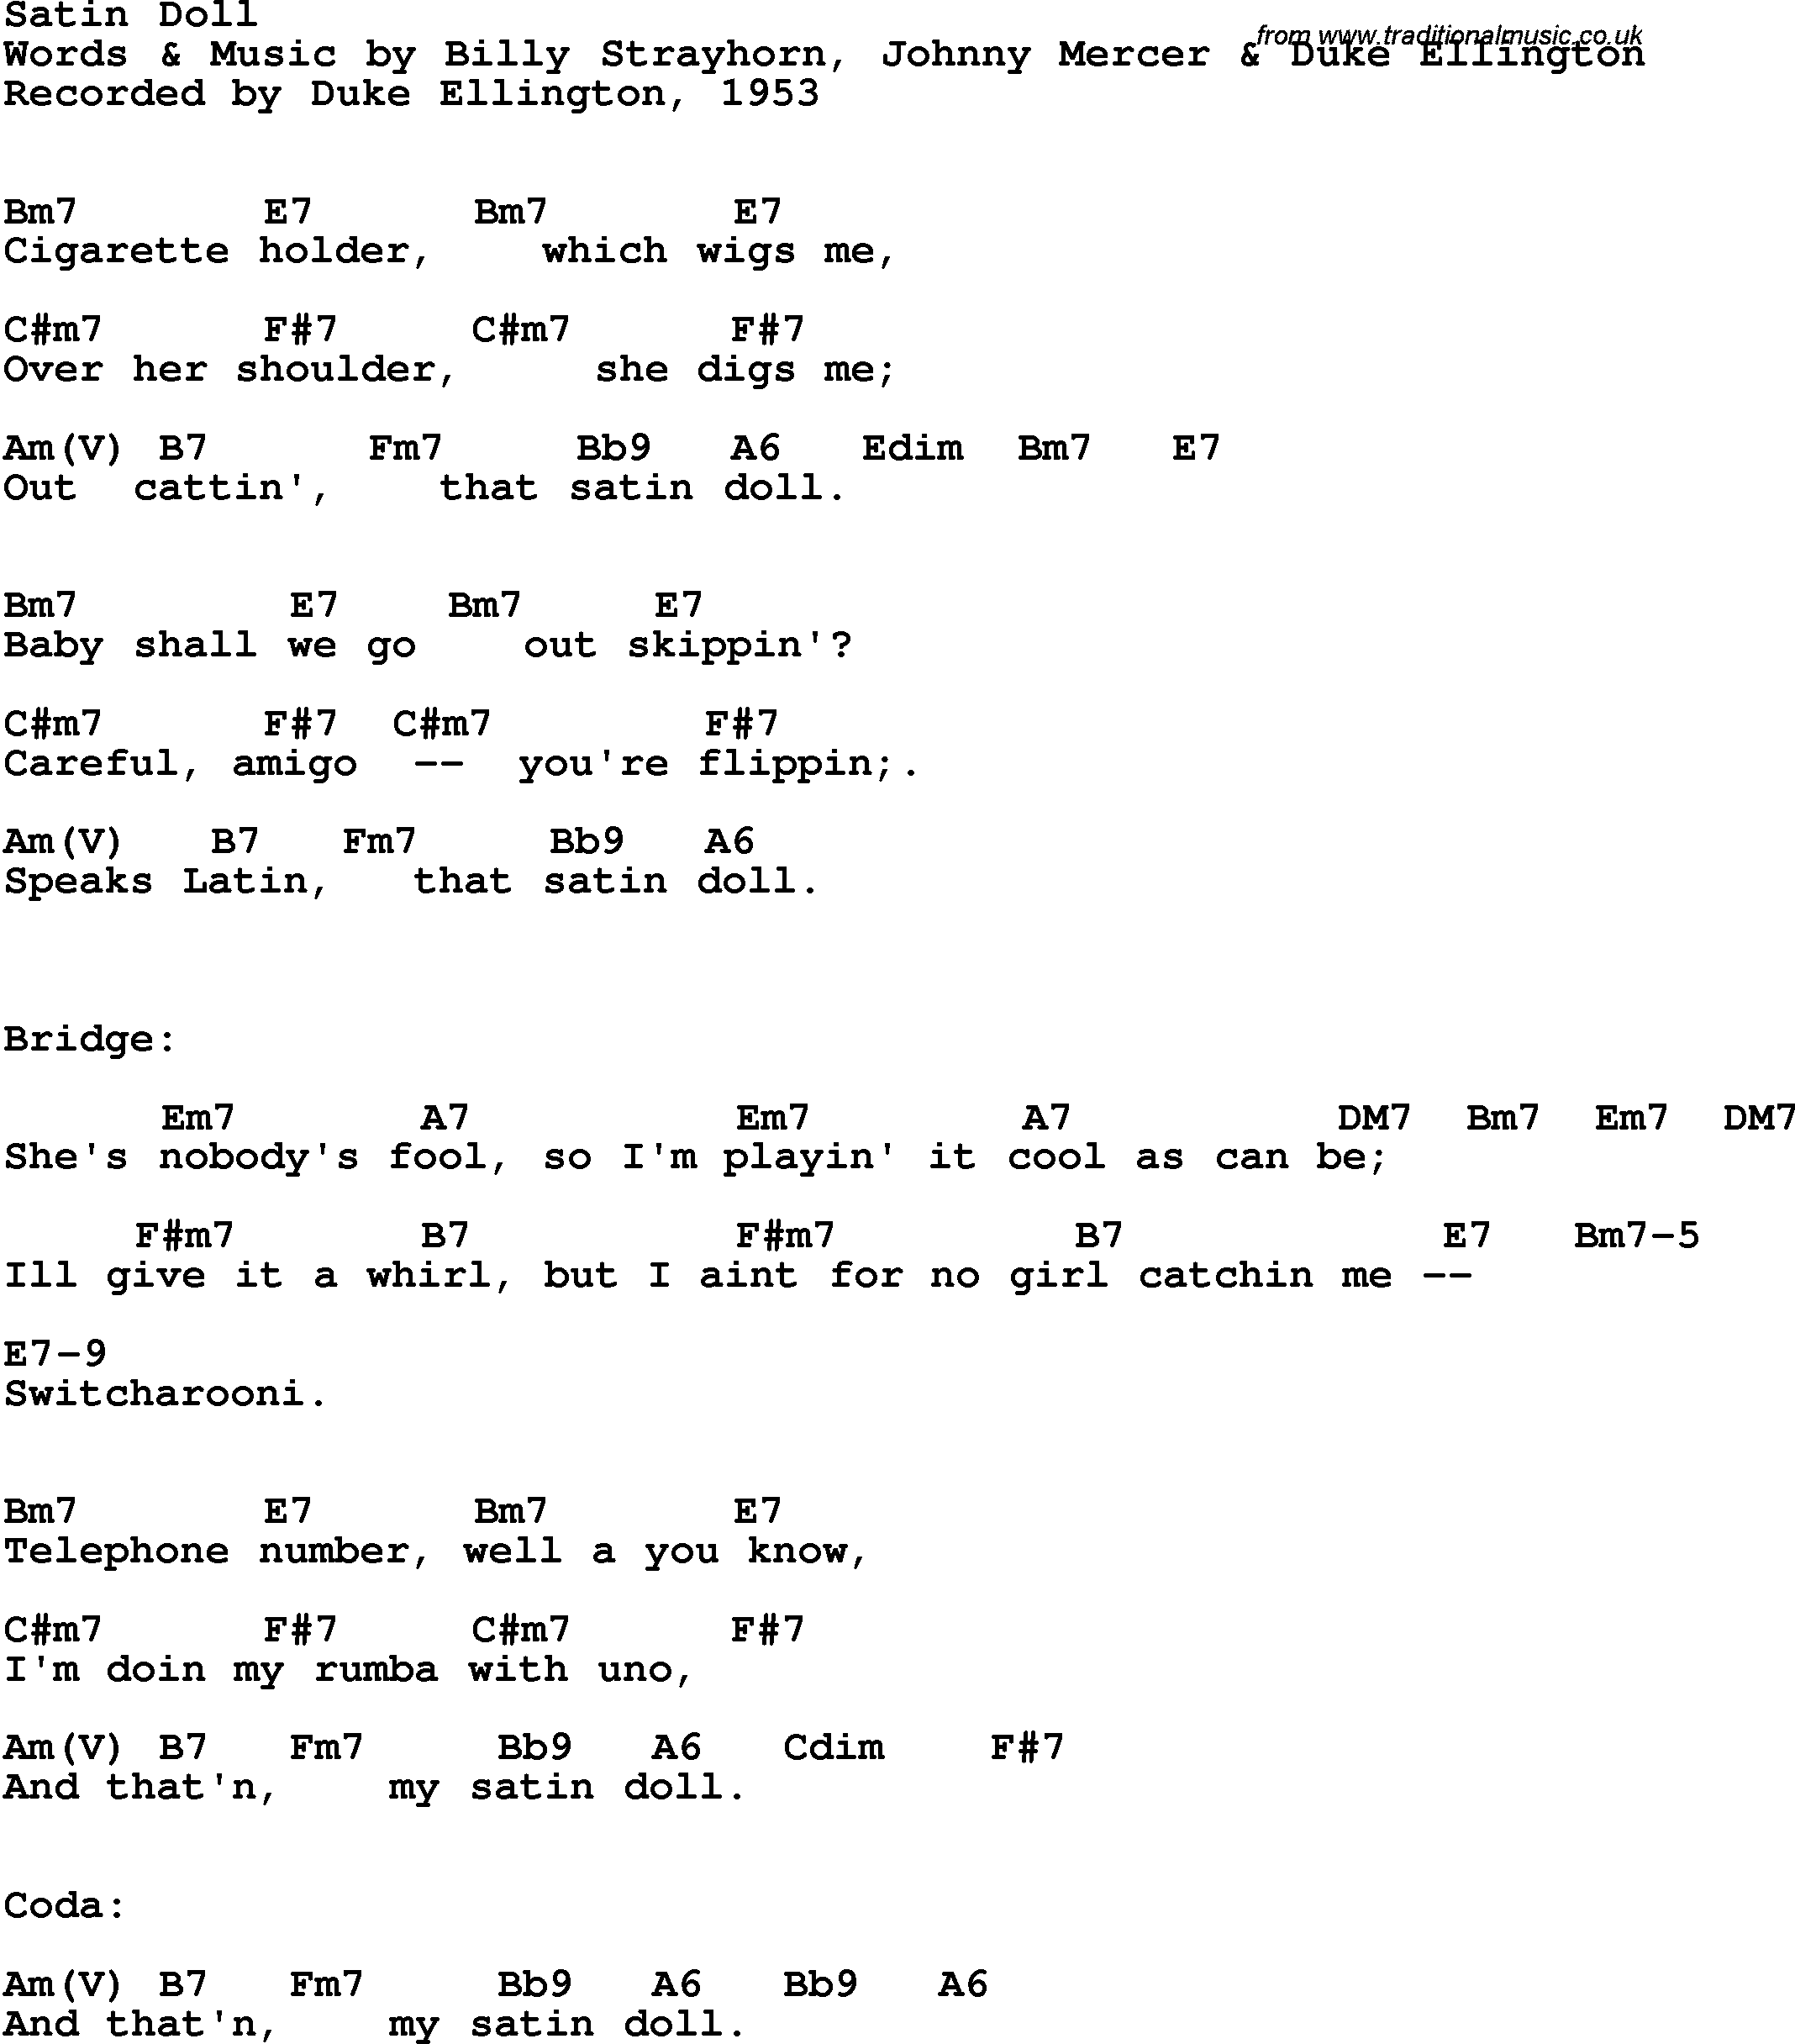 Song Lyrics with guitar chords for Satin Doll - Duke Ellington, 1953